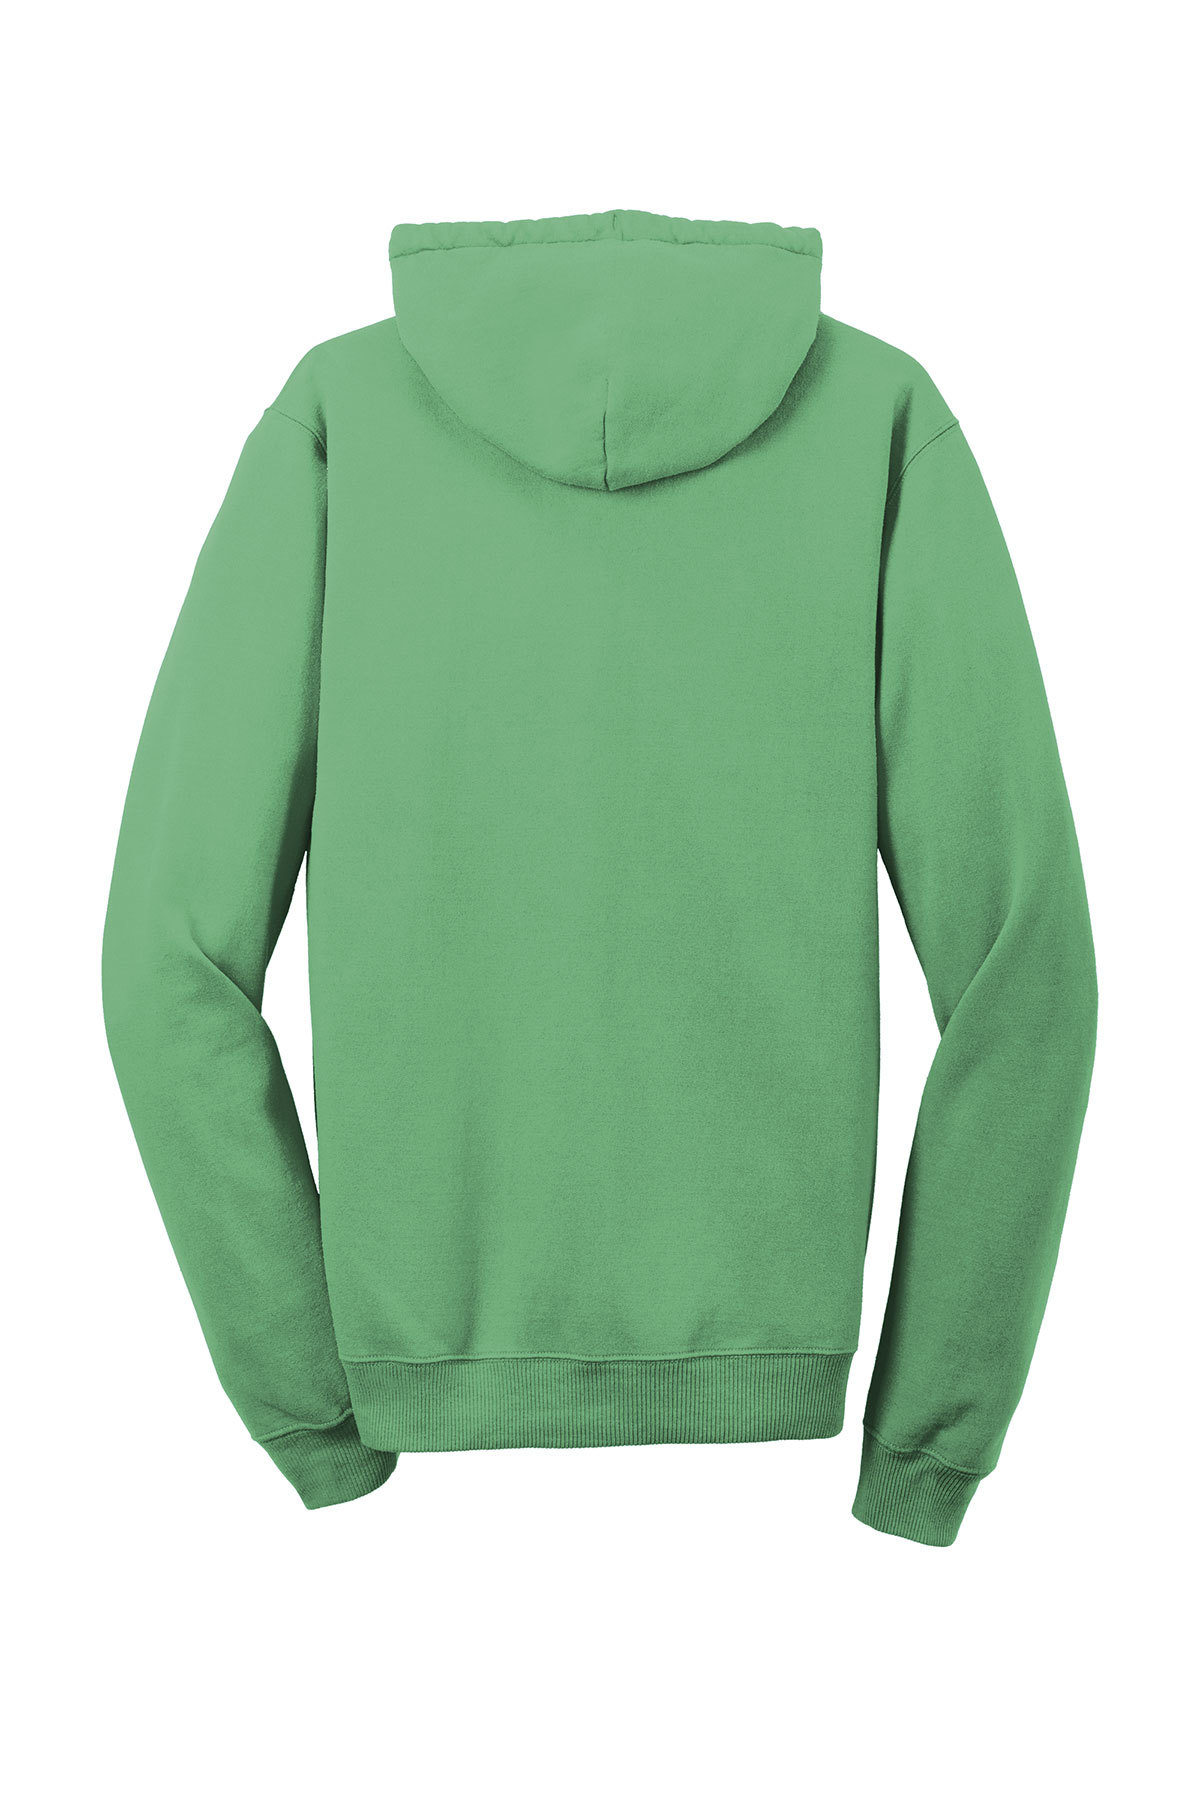 Port & Company Beach Wash Garment-Dyed Pullover Hooded Sweatshirt 